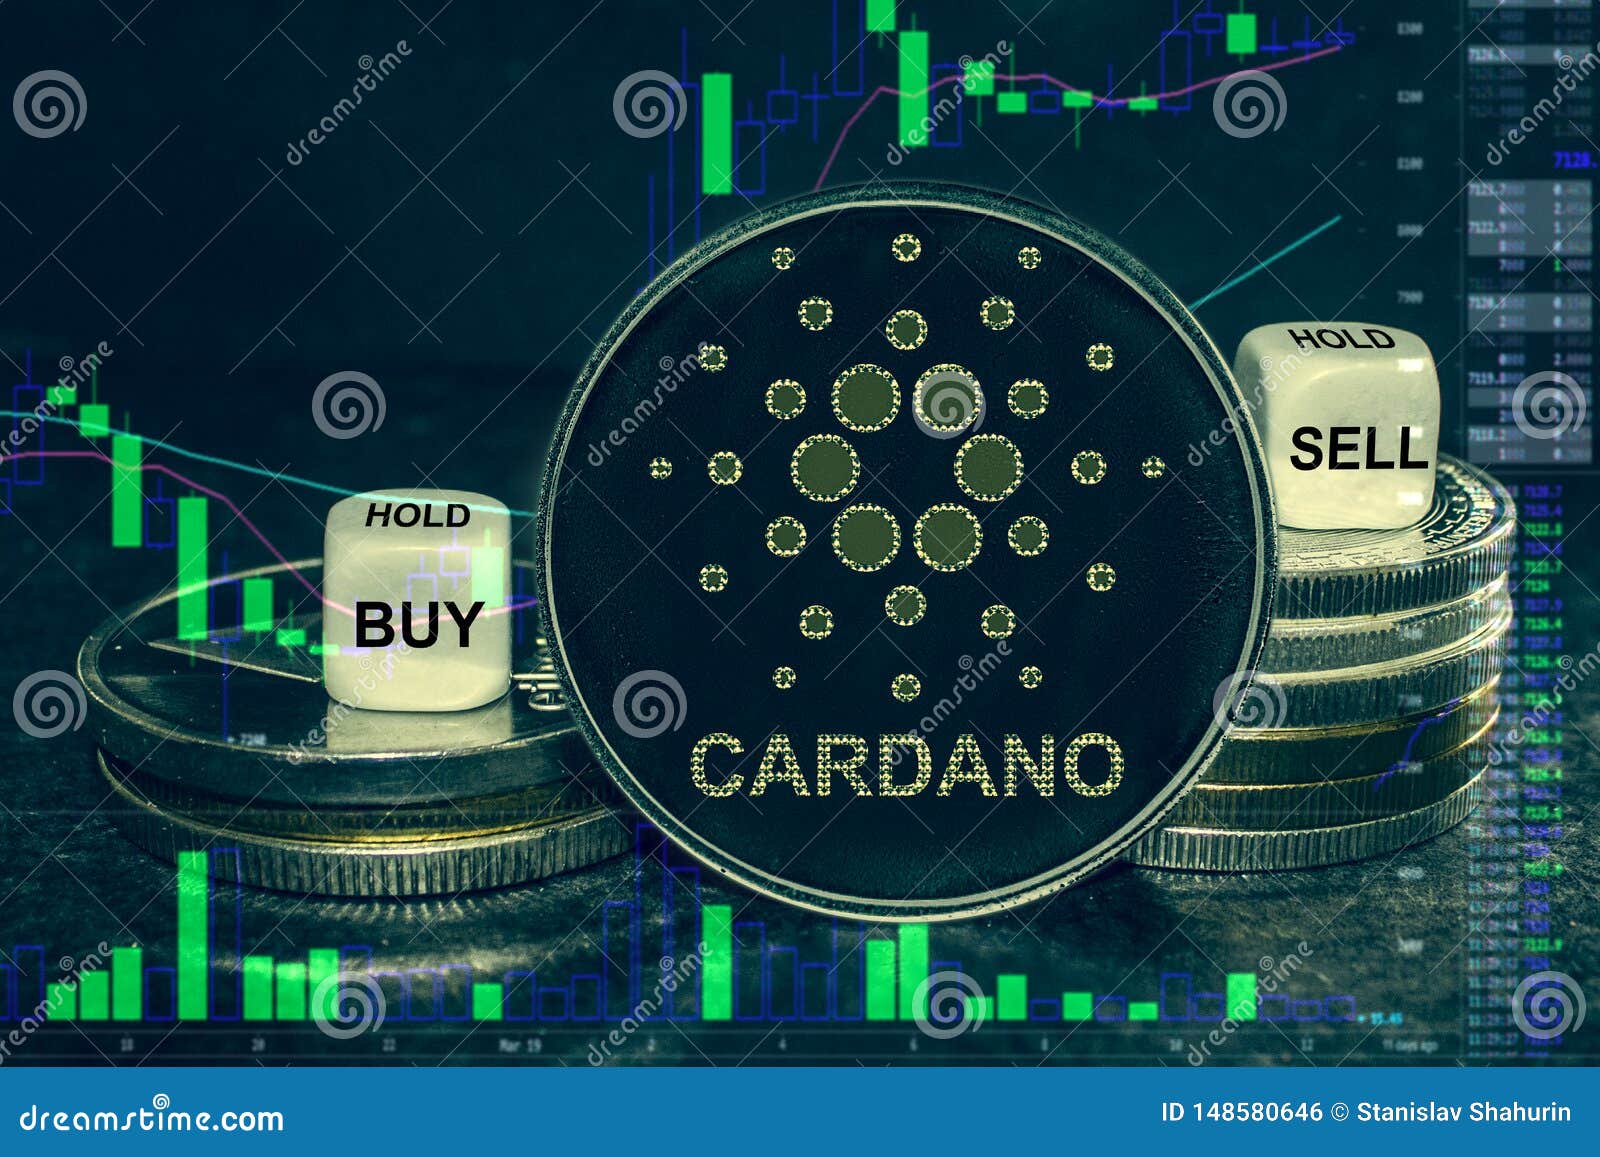 crypto exchange to buy cardano